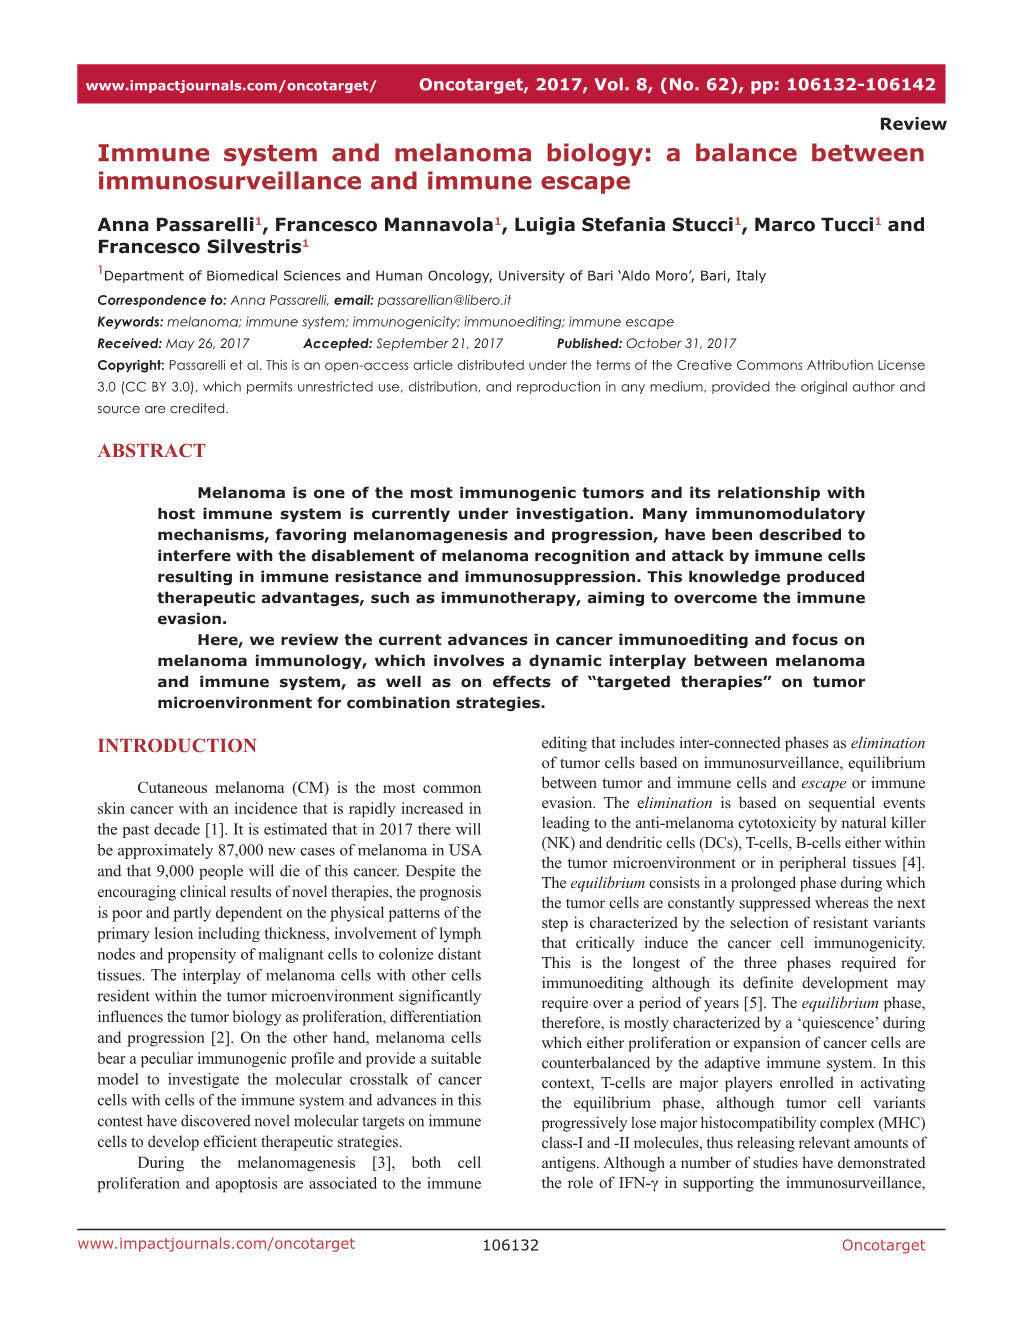 Immune System and Melanoma Biology: a Balance Between Immunosurveillance and Immune Escape